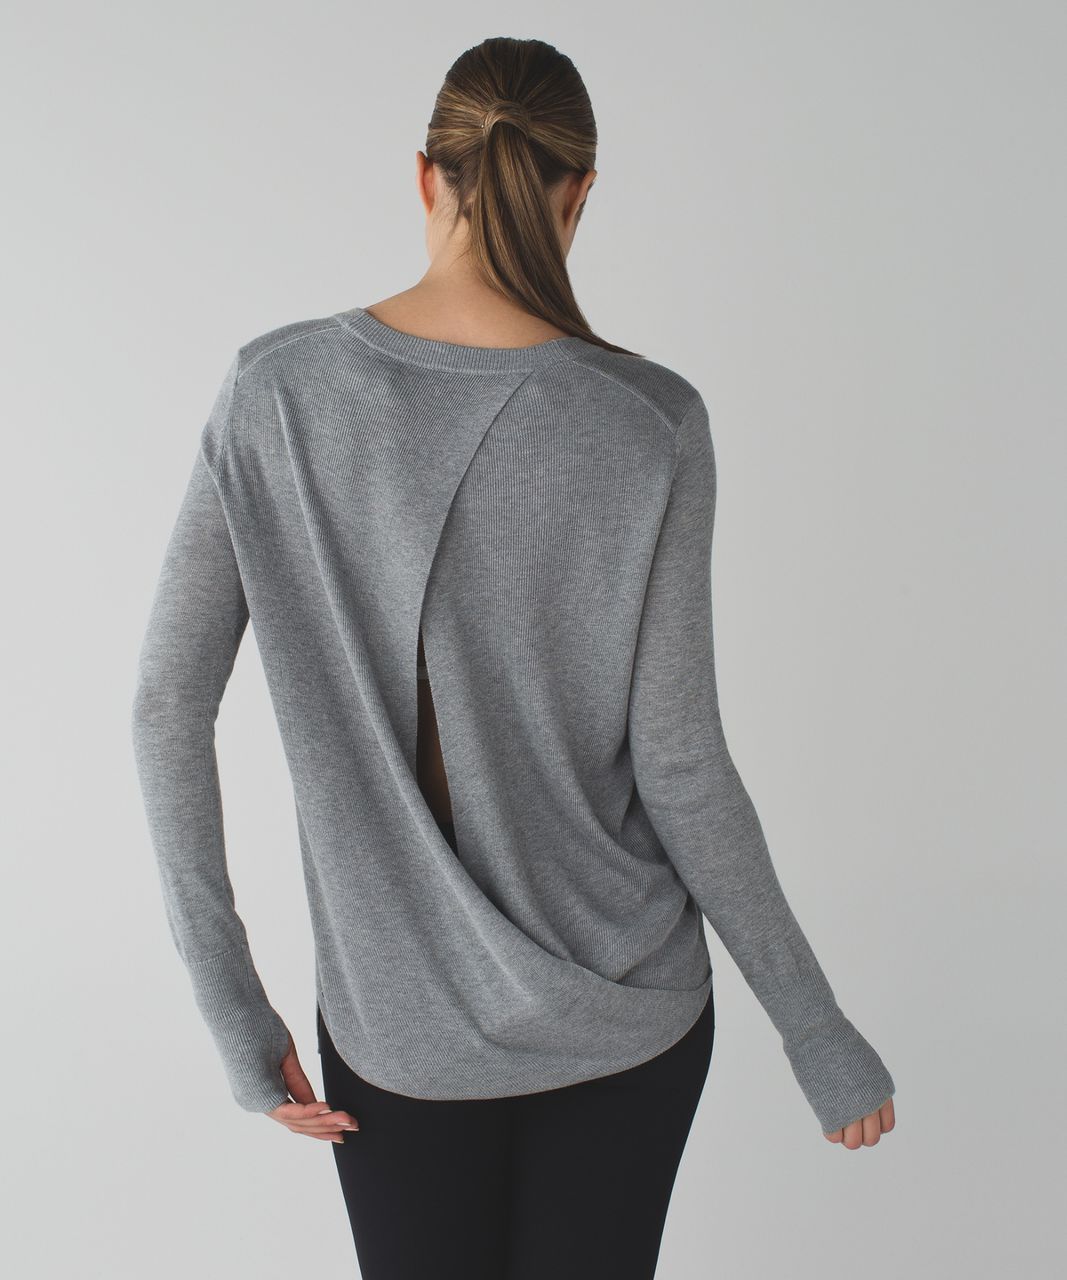 Lululemon Bring It Backbend Sweater - Heathered Medium Grey